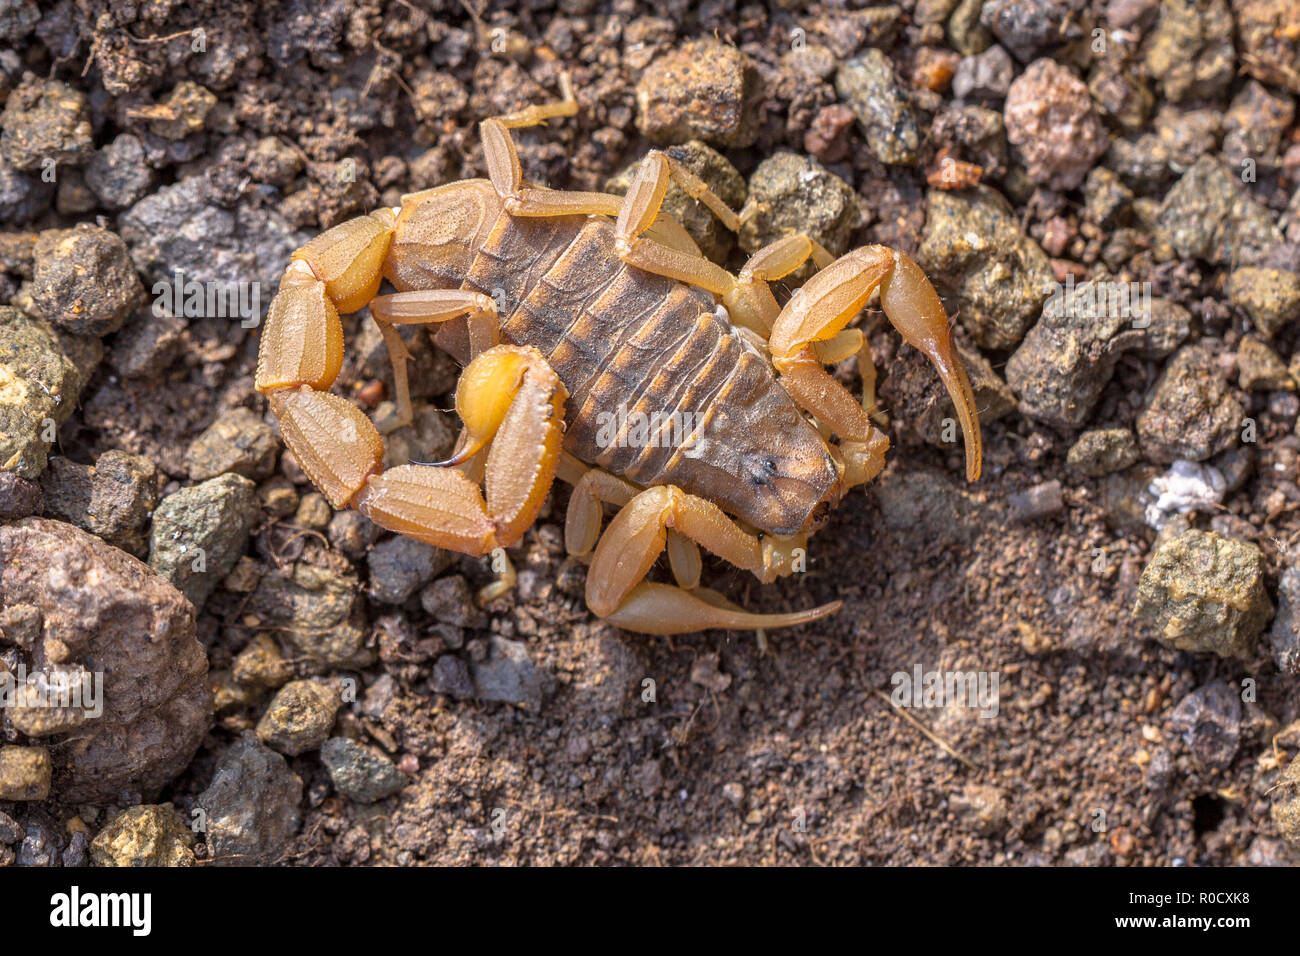 Common Yellow Scorpion (Buthus occitanus) on  grey soil background Stock Photo